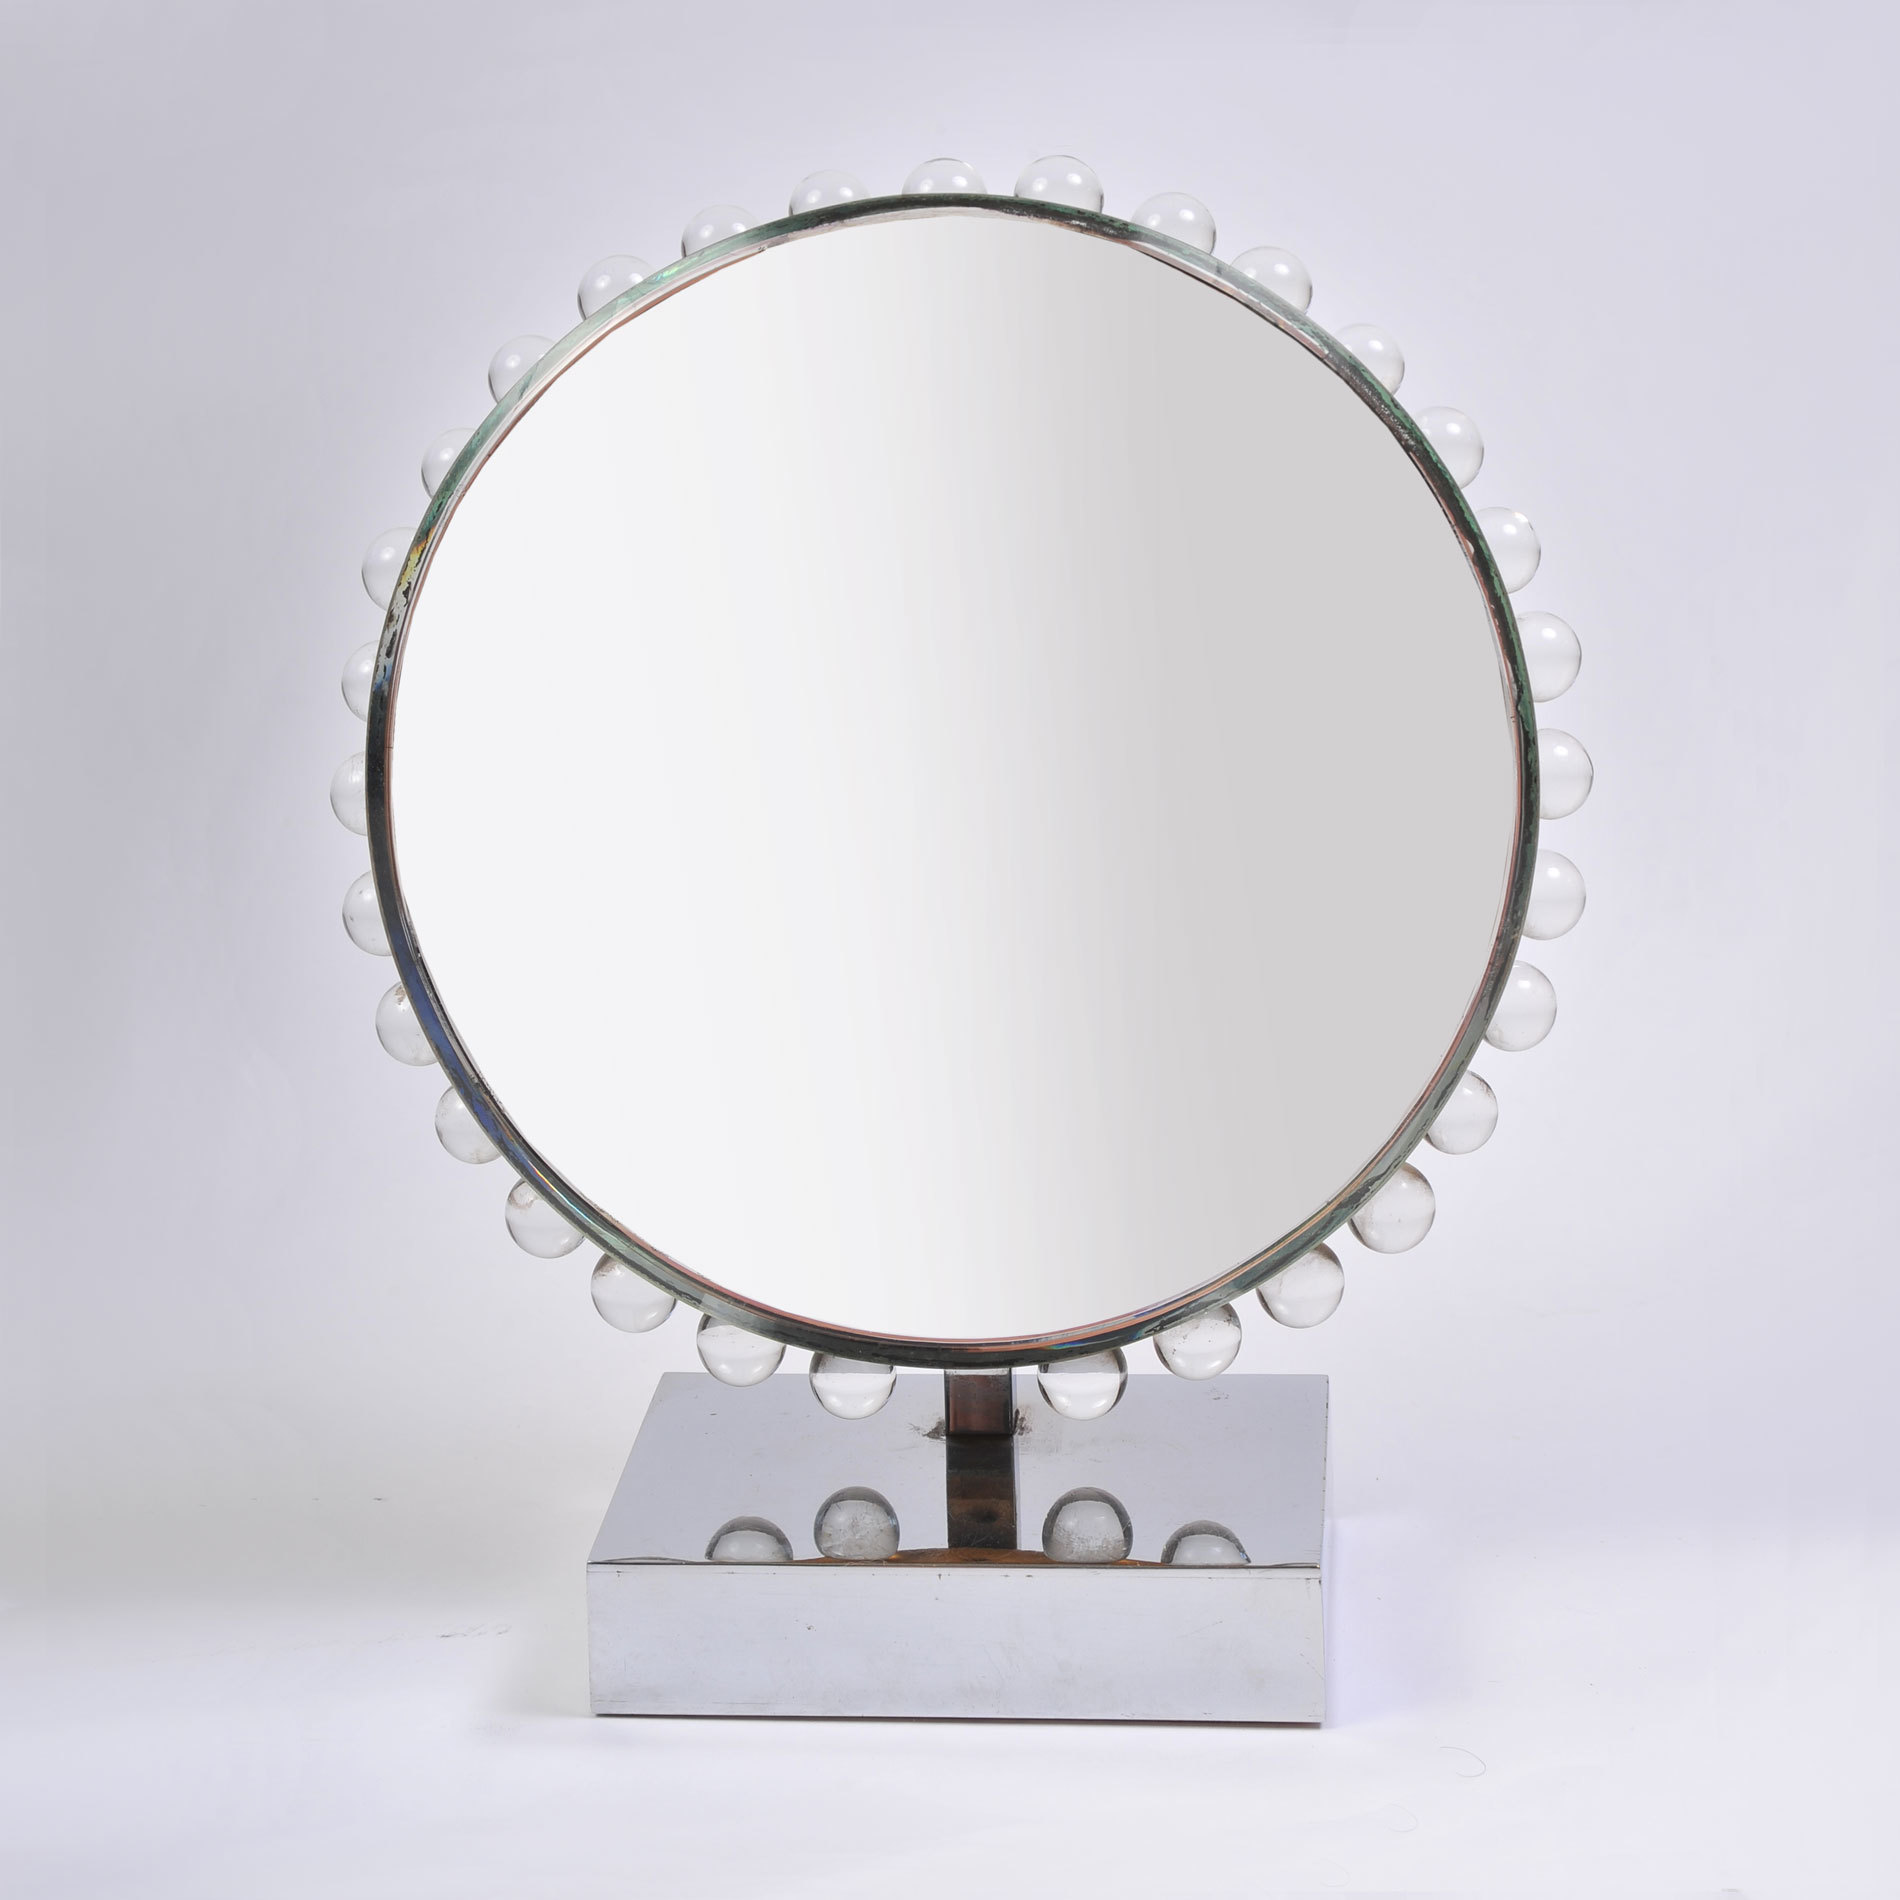 The image for Circular Ball Mirror 01